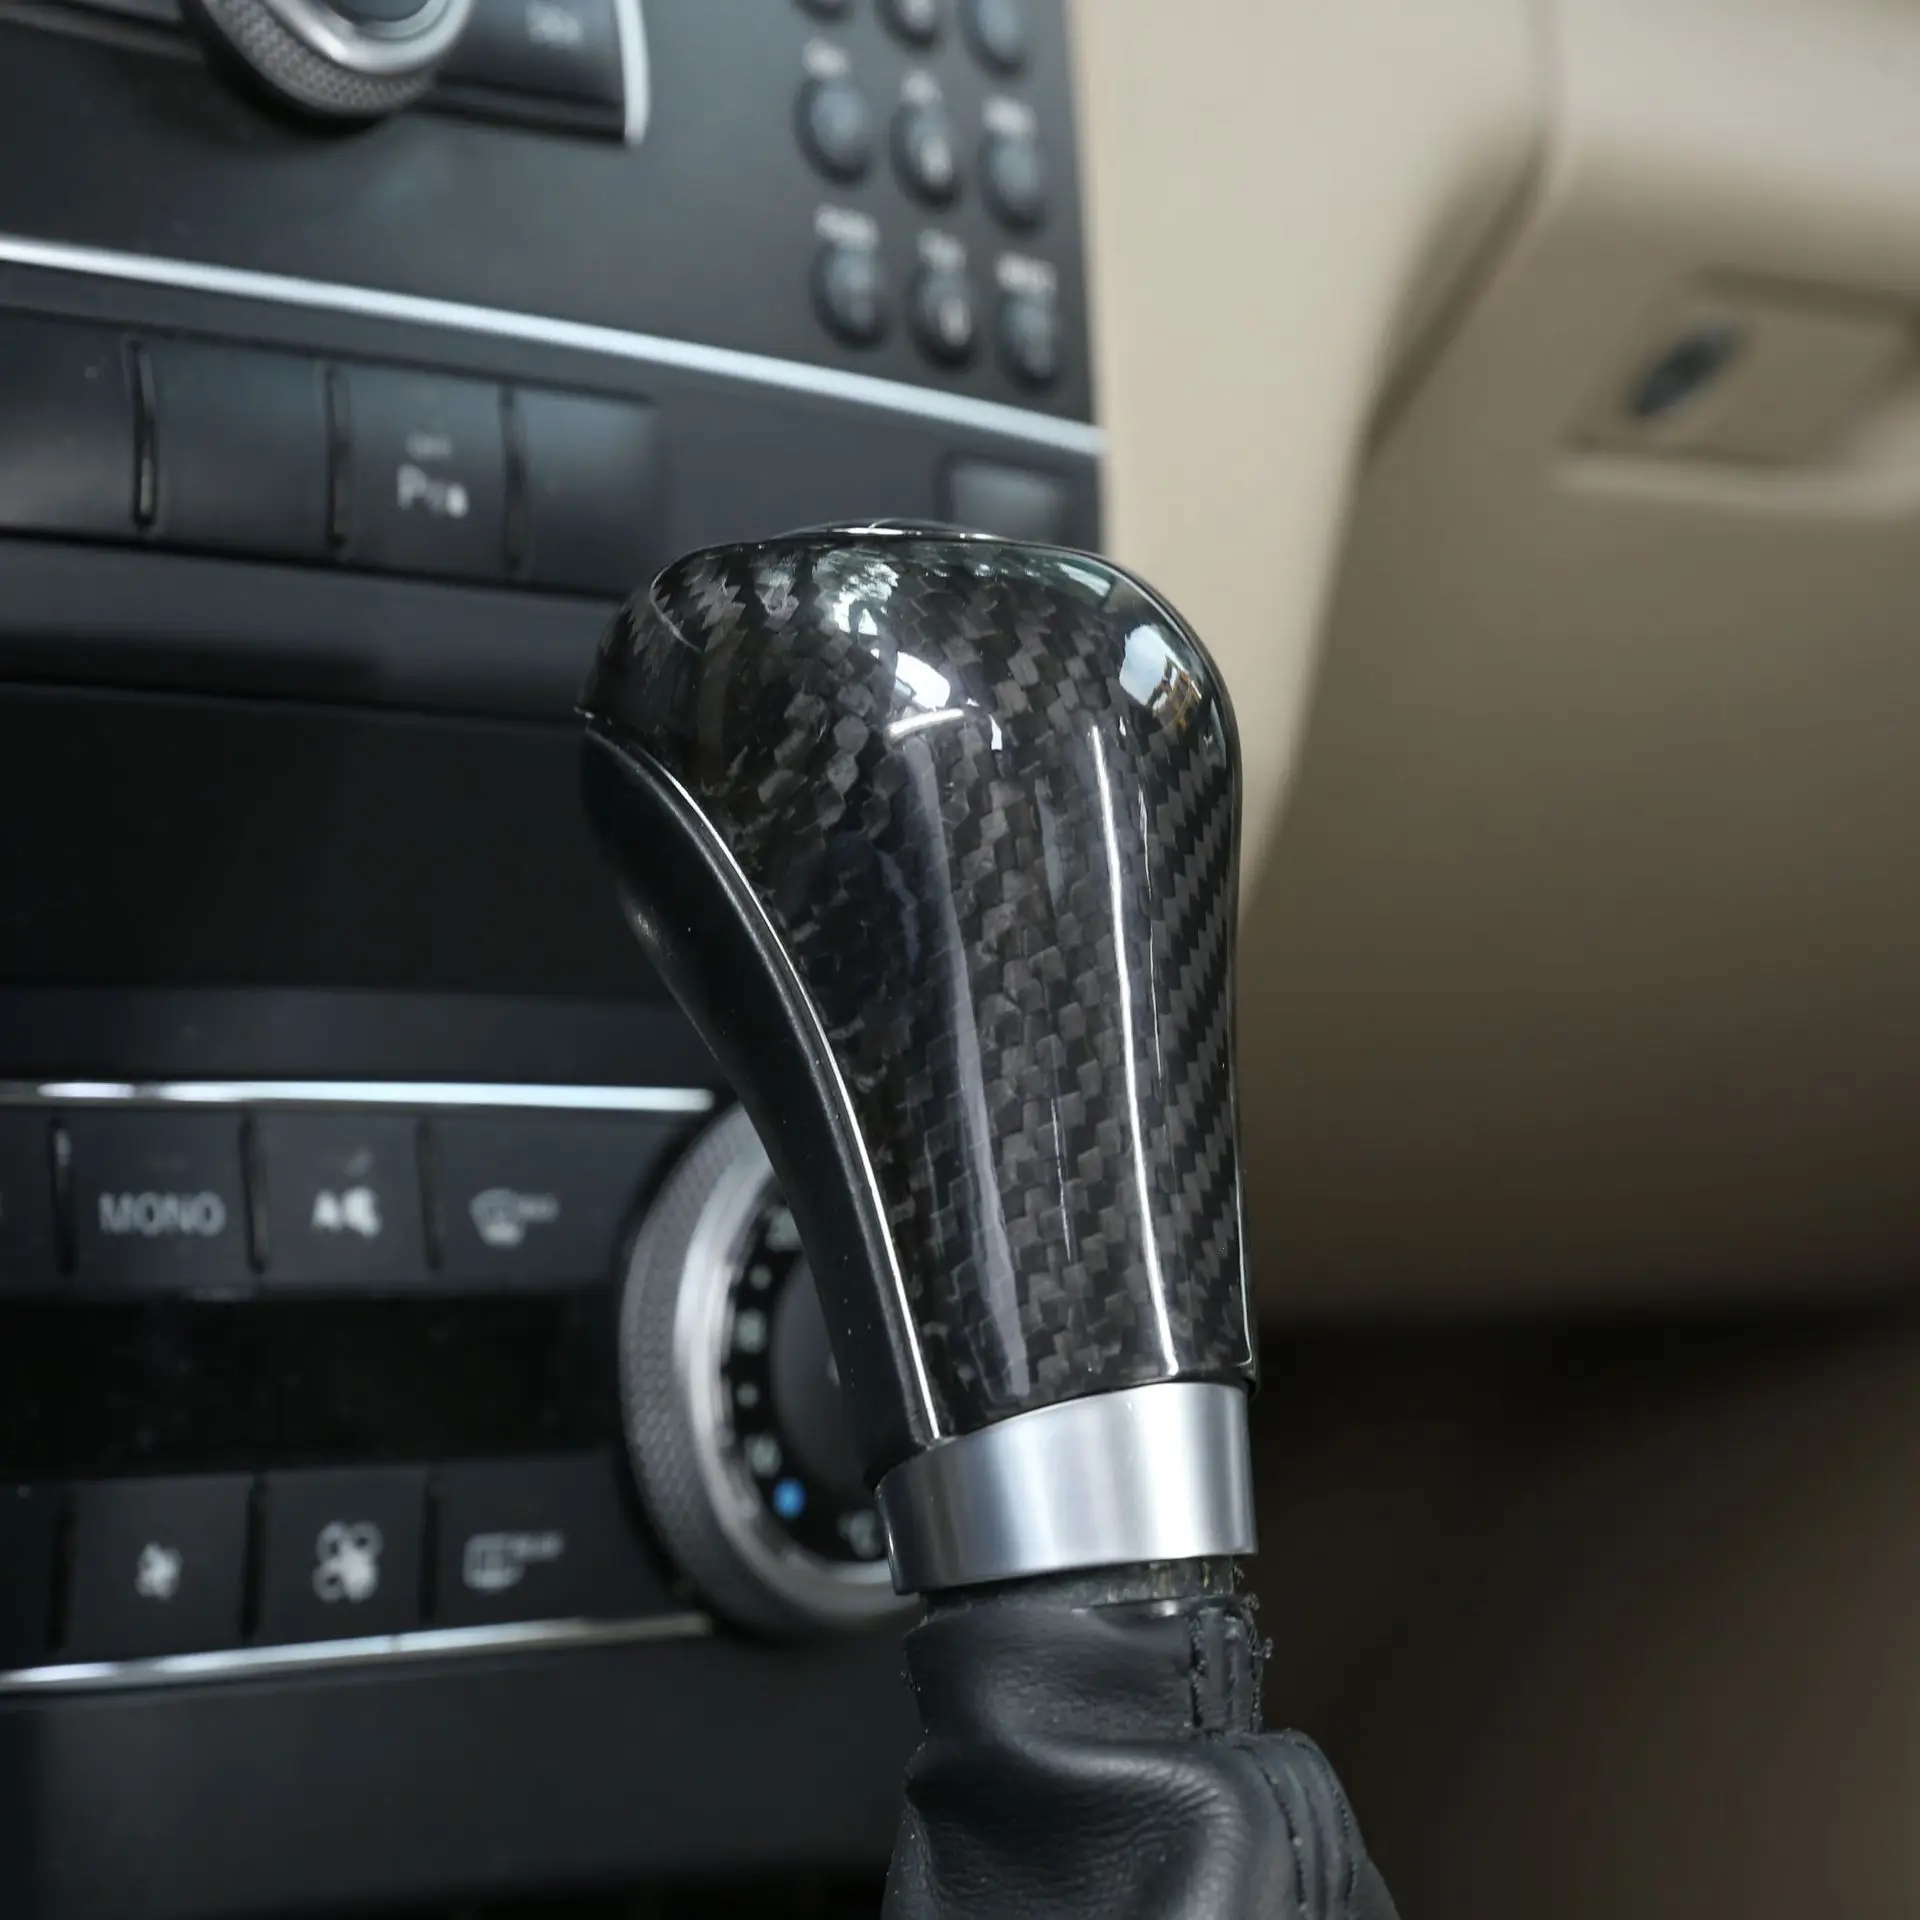 For Benz A C E class W204 W212 Gear lever decorative cover carbon fiber interior modification